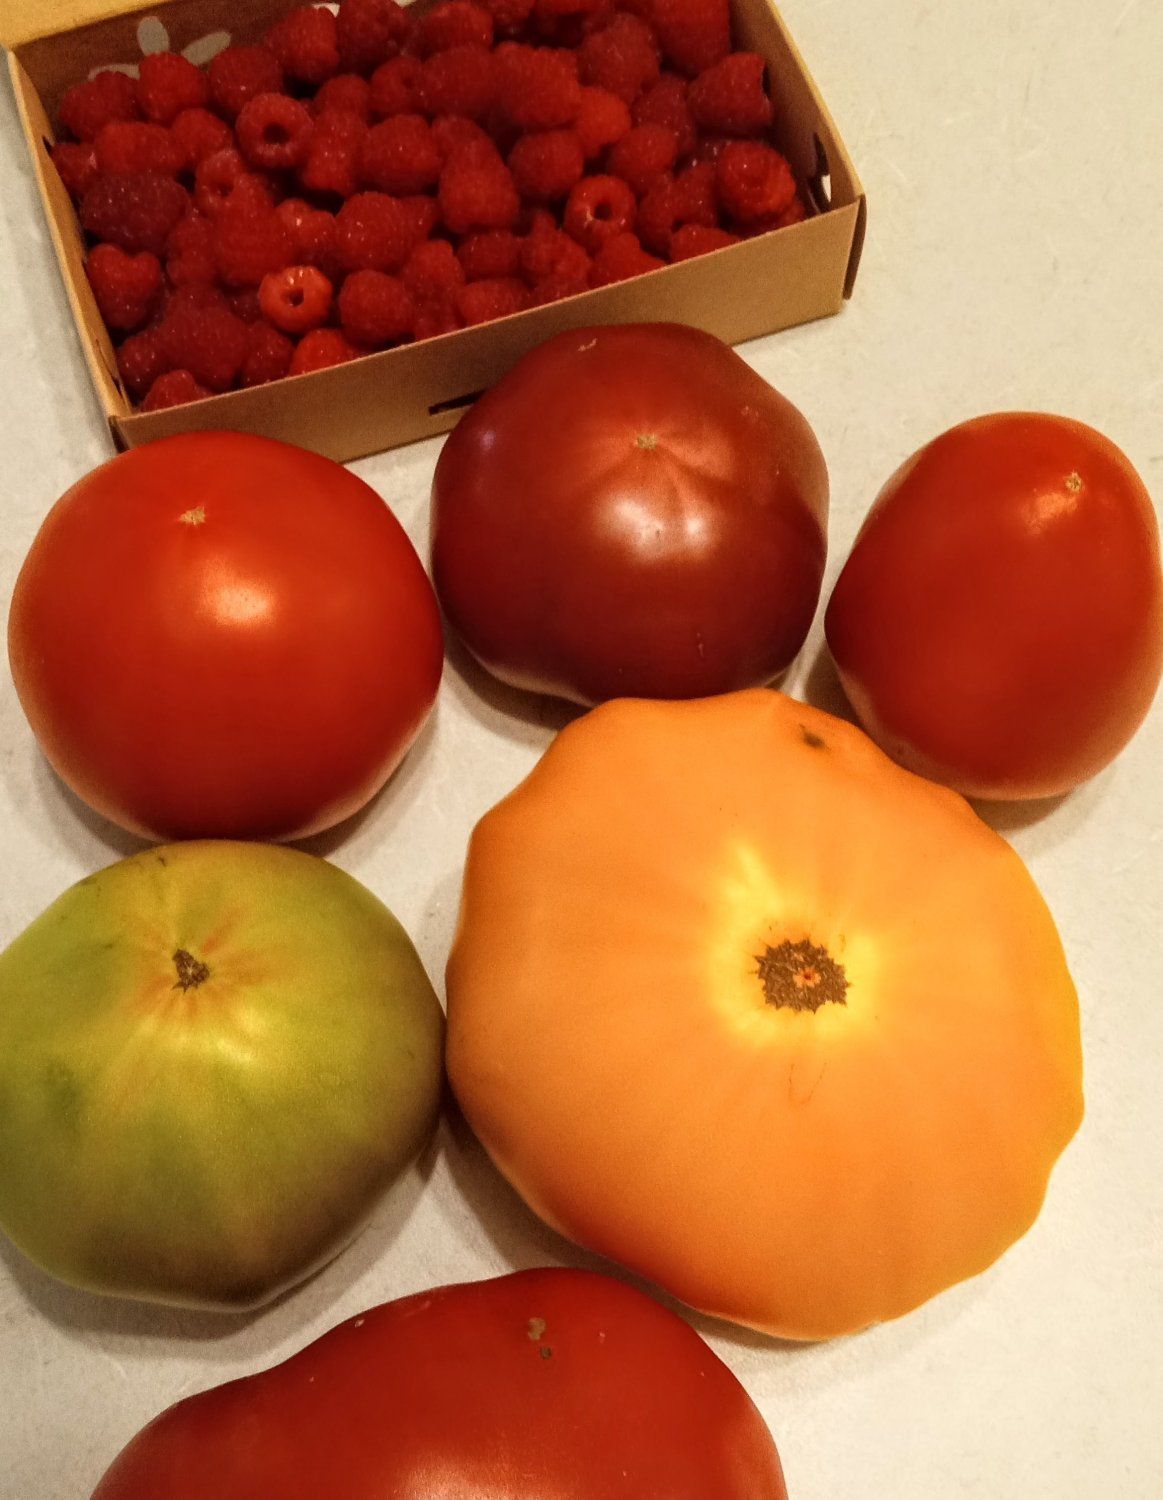 Previous Happening: More Tomatoes, More Raspberries